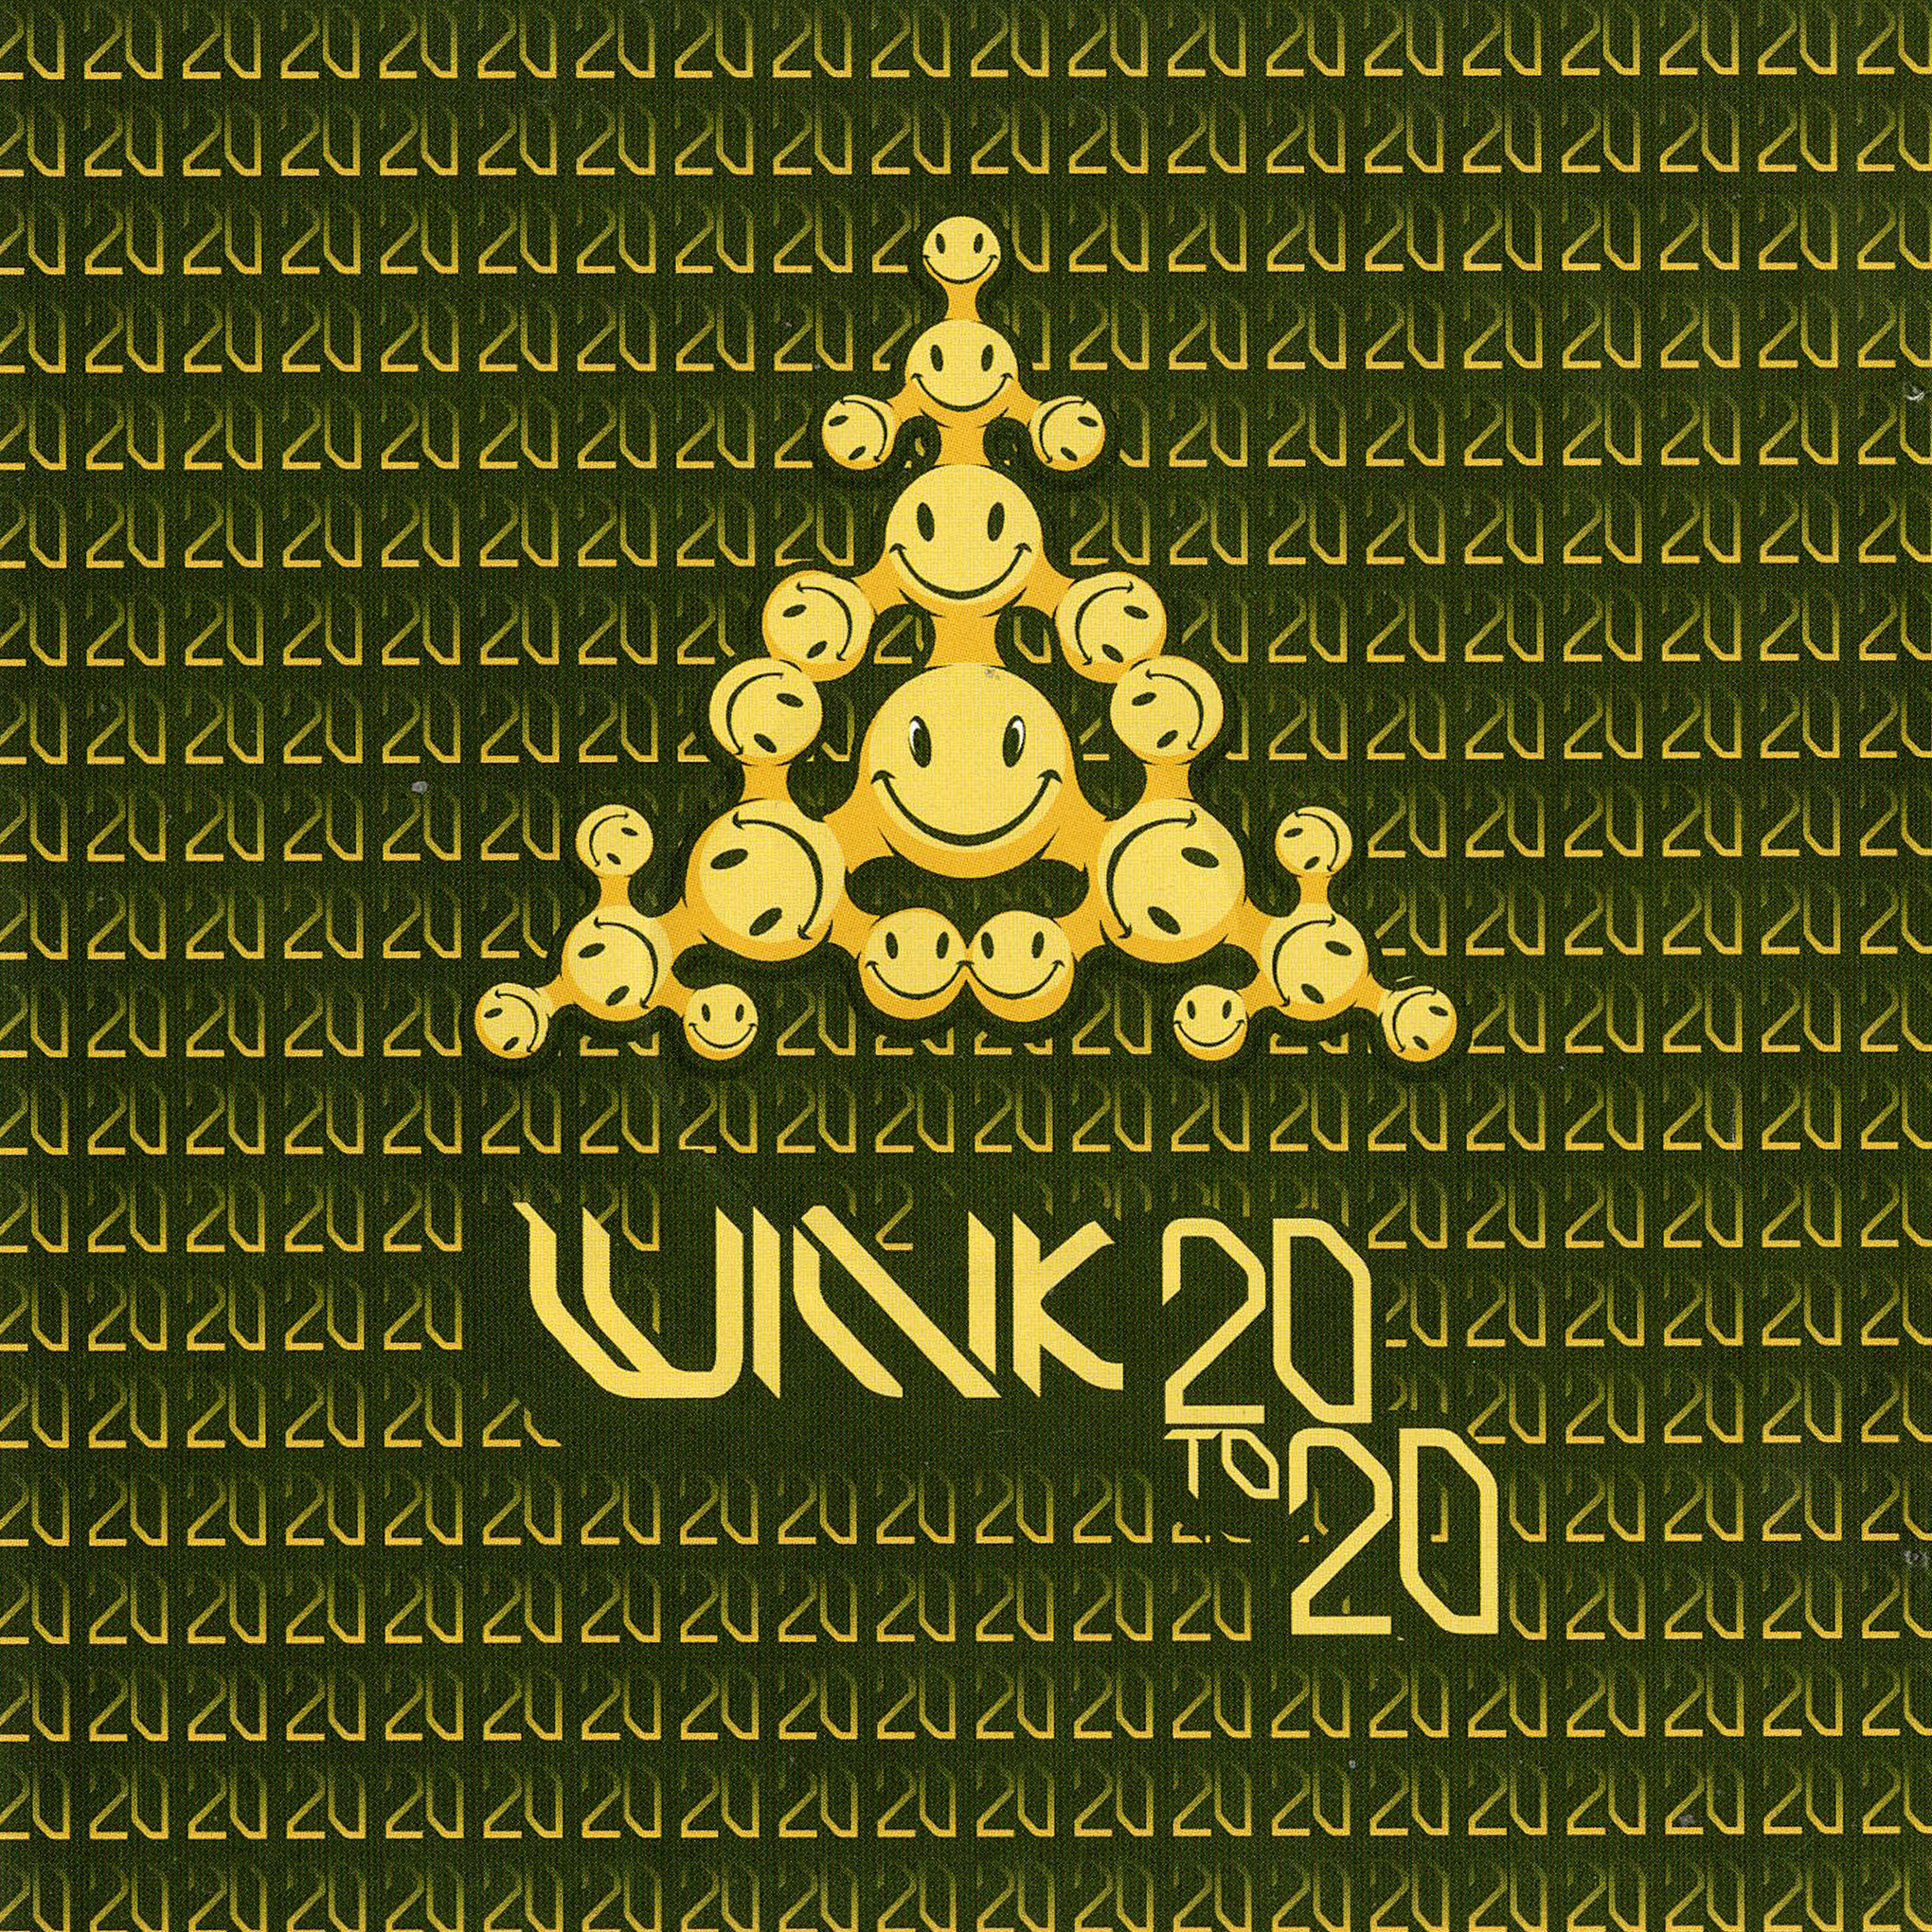 Josh Wink - 20 to 20  [USED]